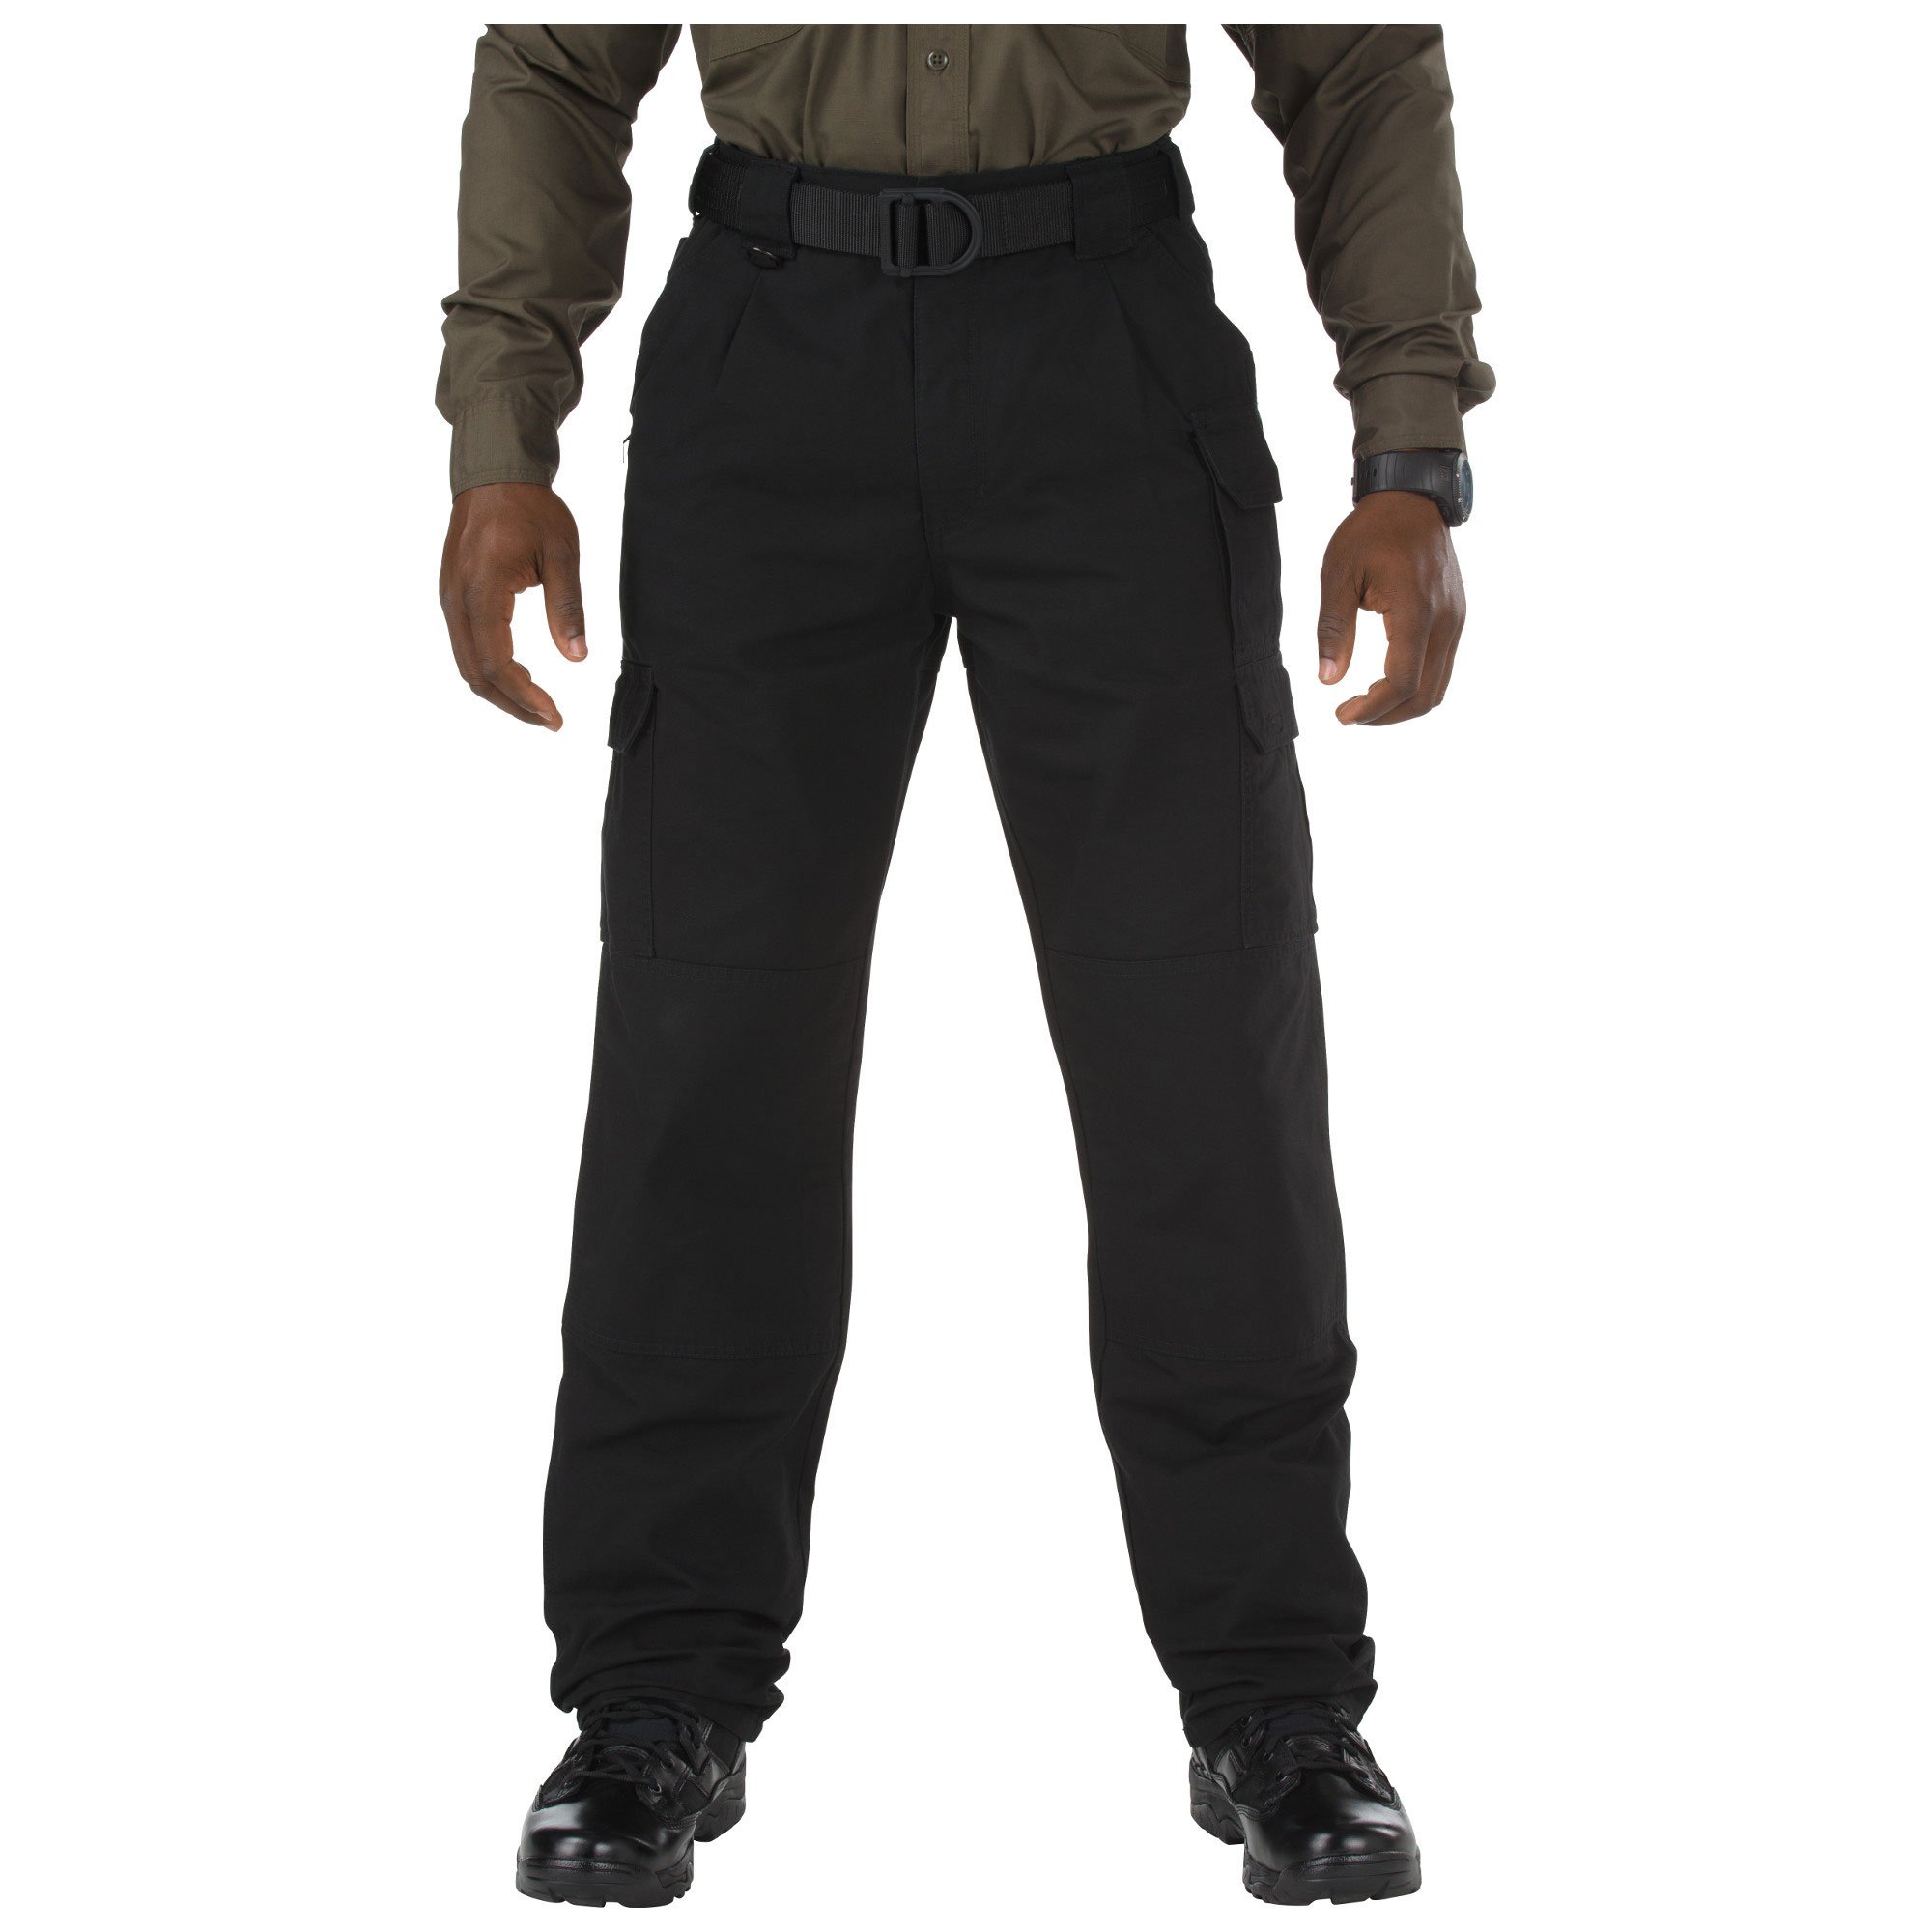 5.11 Tactical Pants Cotton | Hunting - Ray